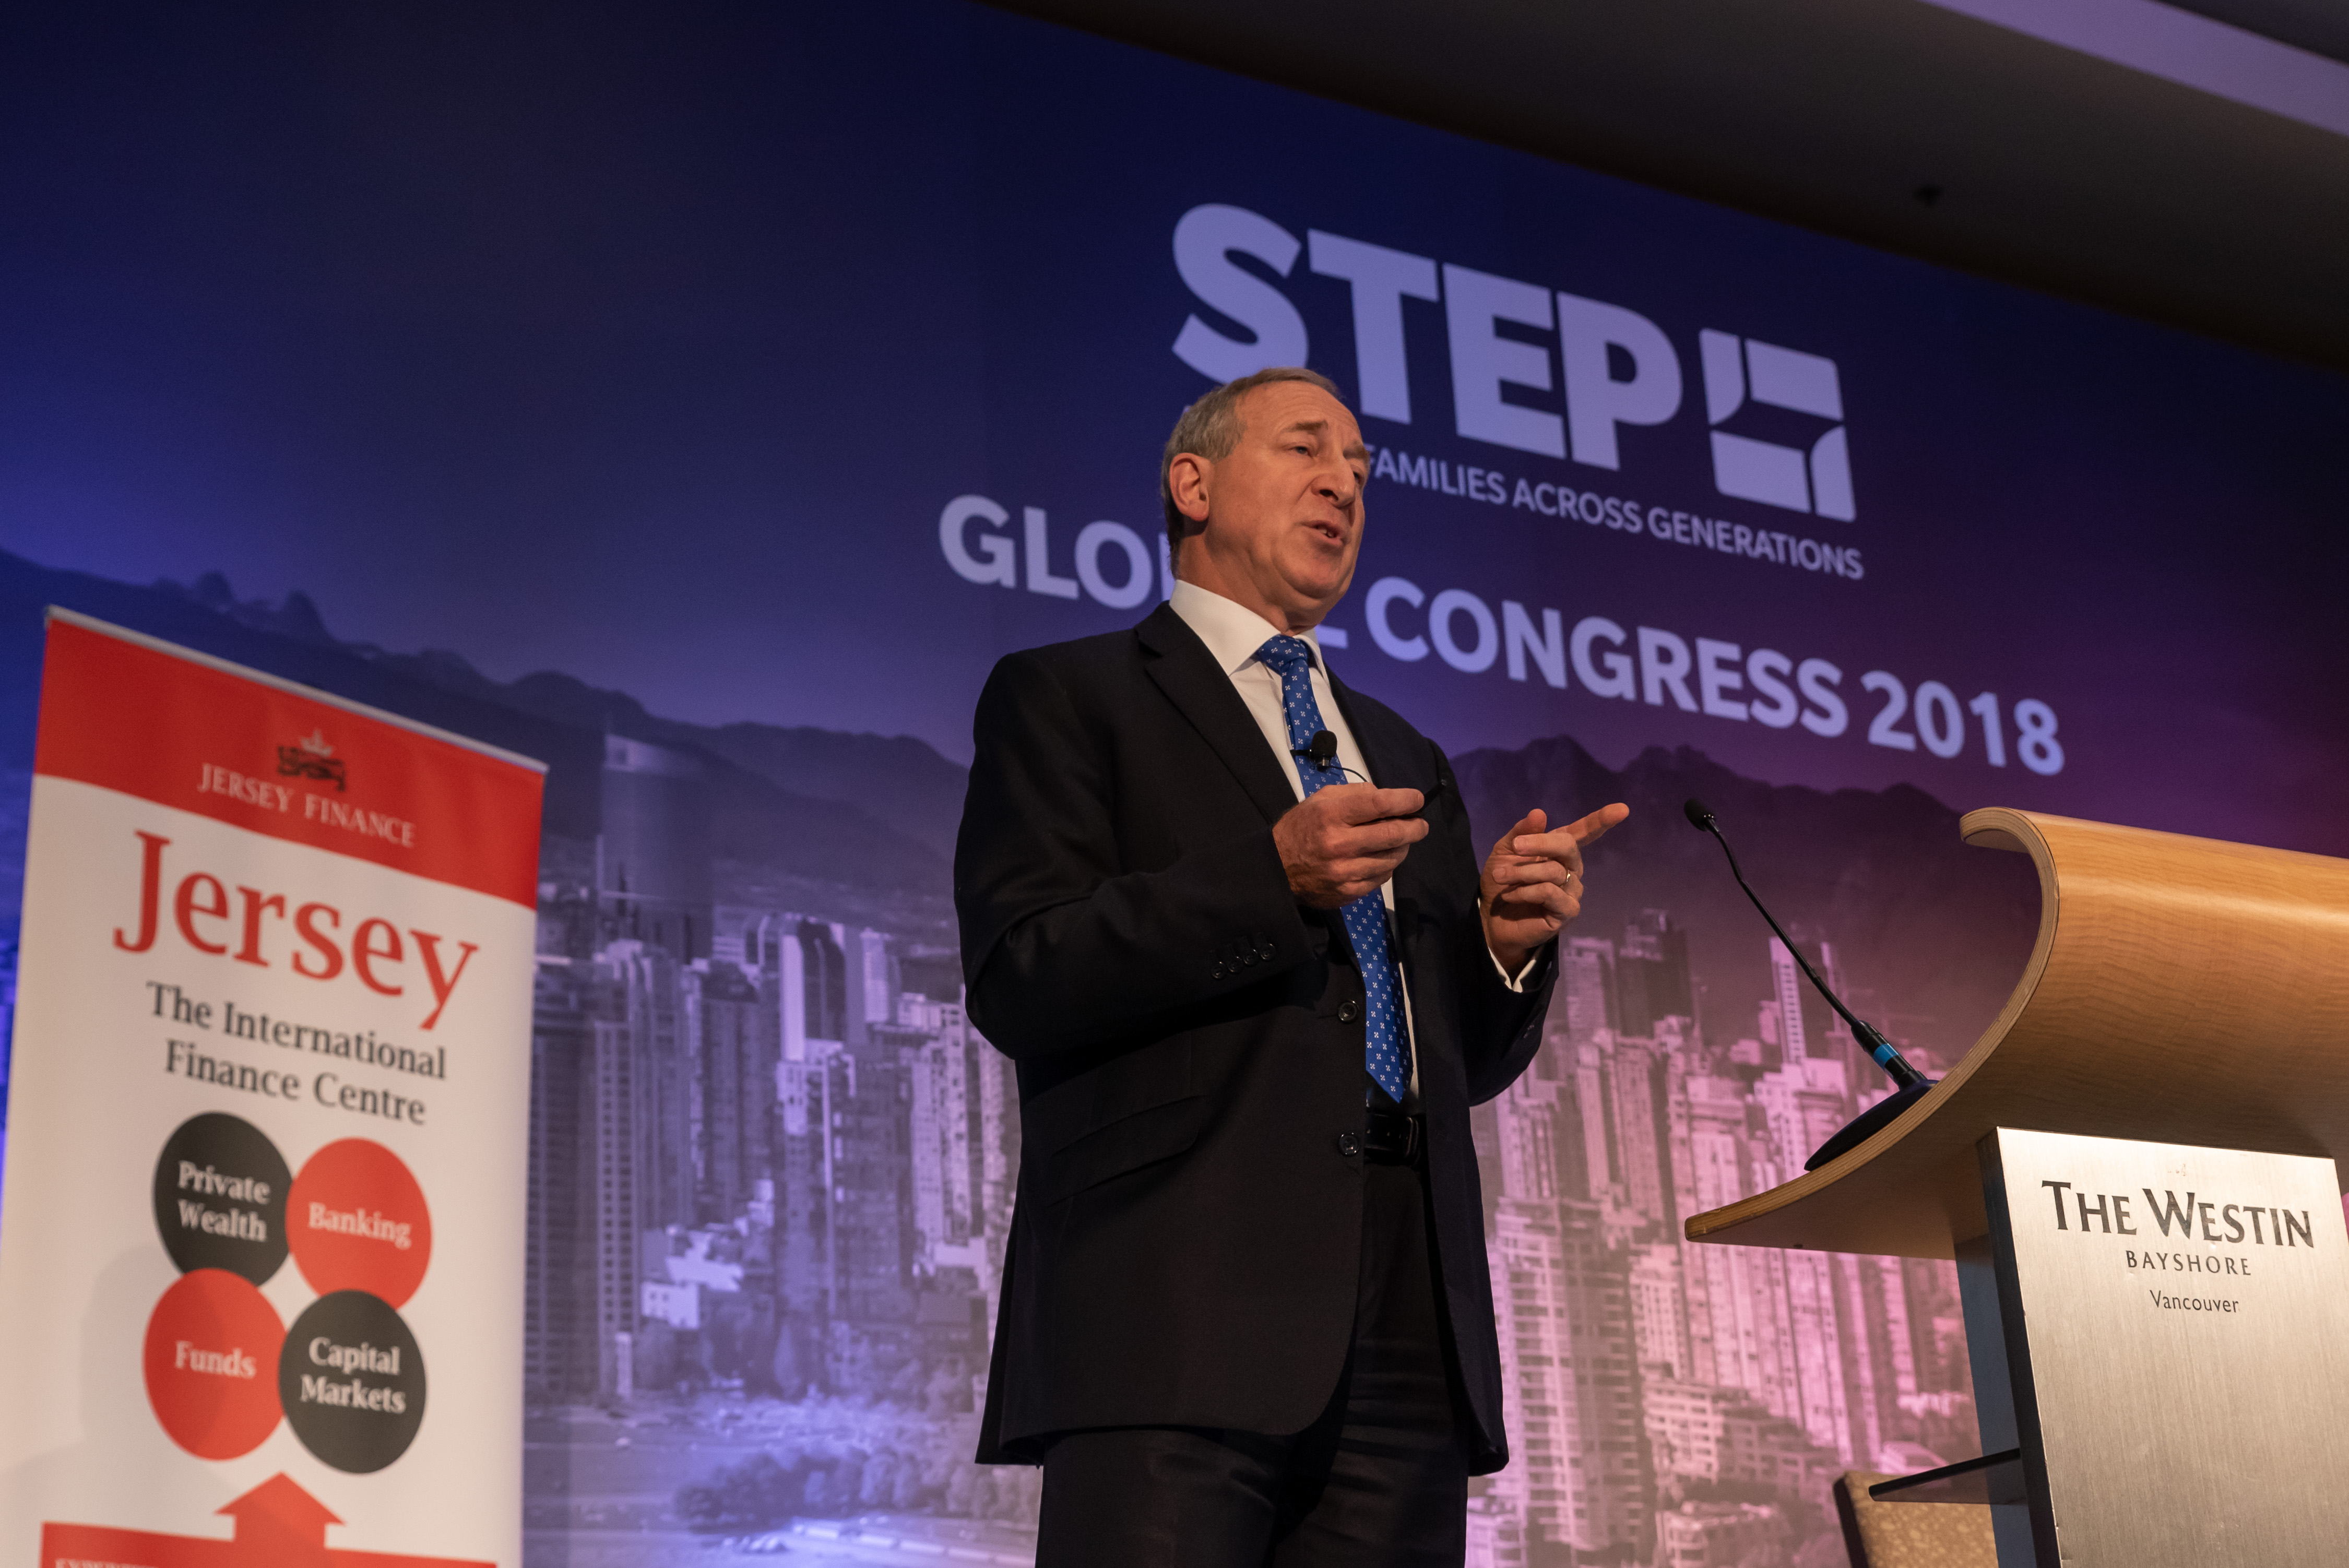 STEP Global Congress